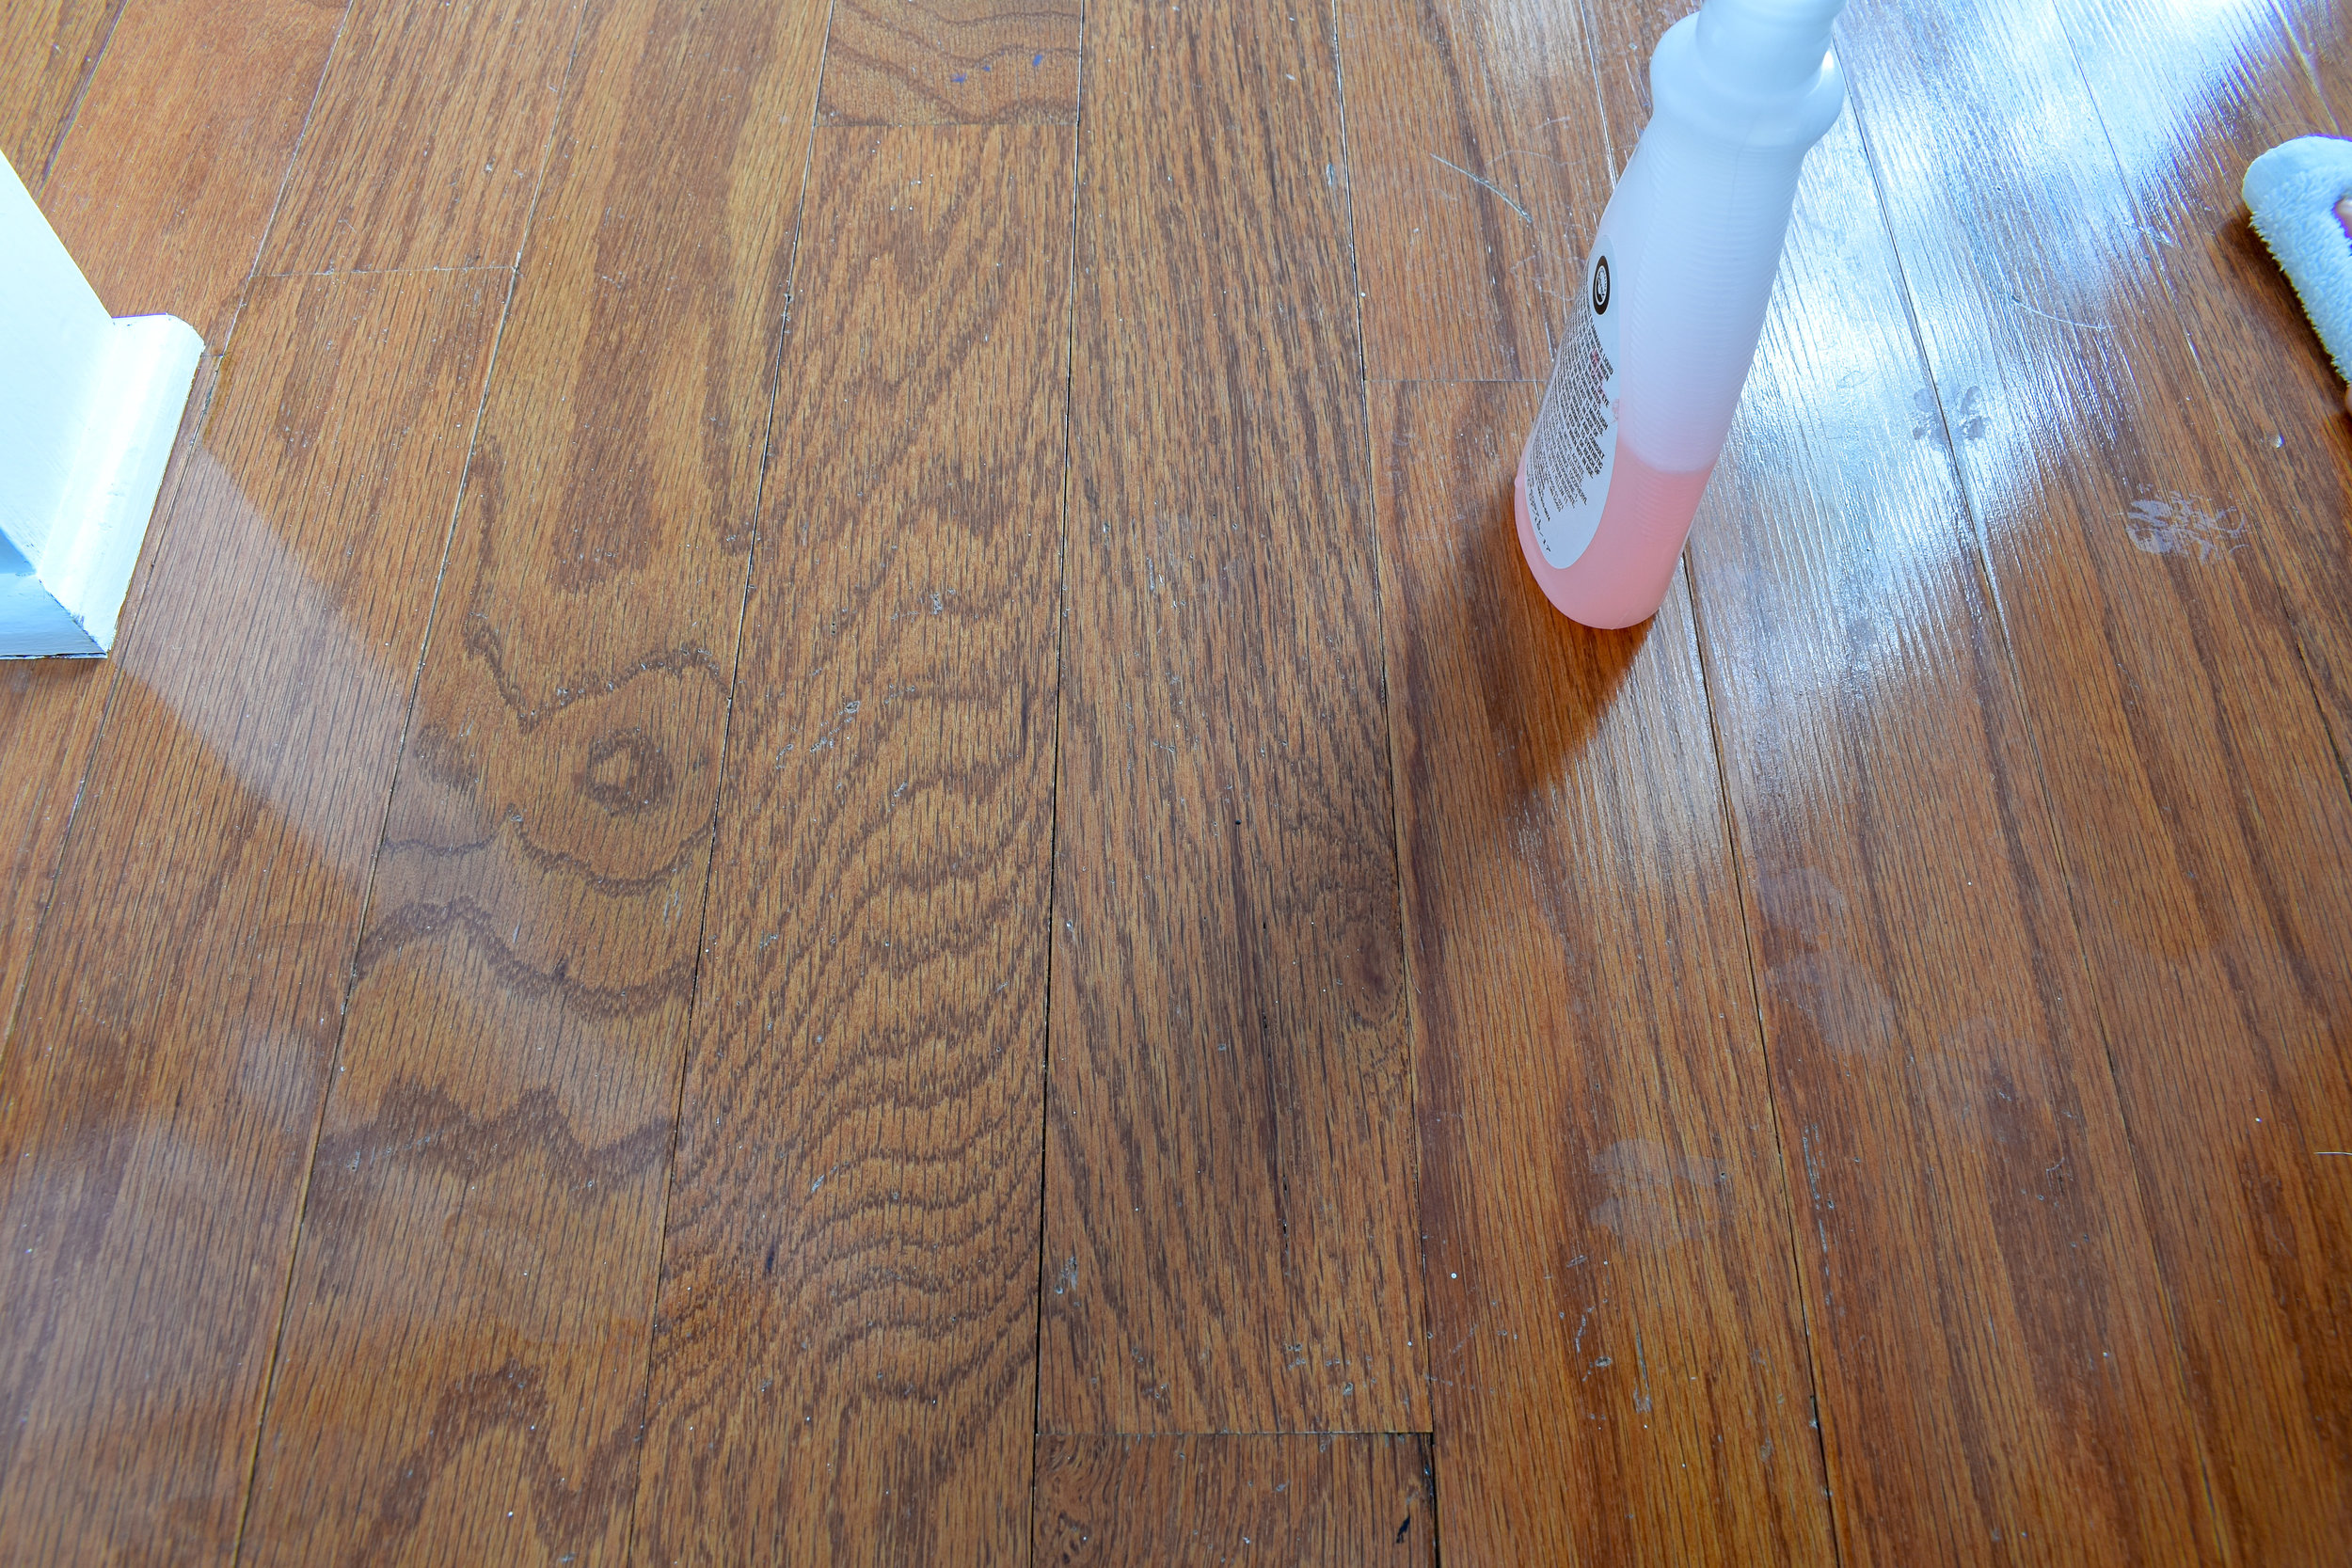 How To Make Old Hardwood Floors Shine, How Do You Make Hardwood Floors Shine